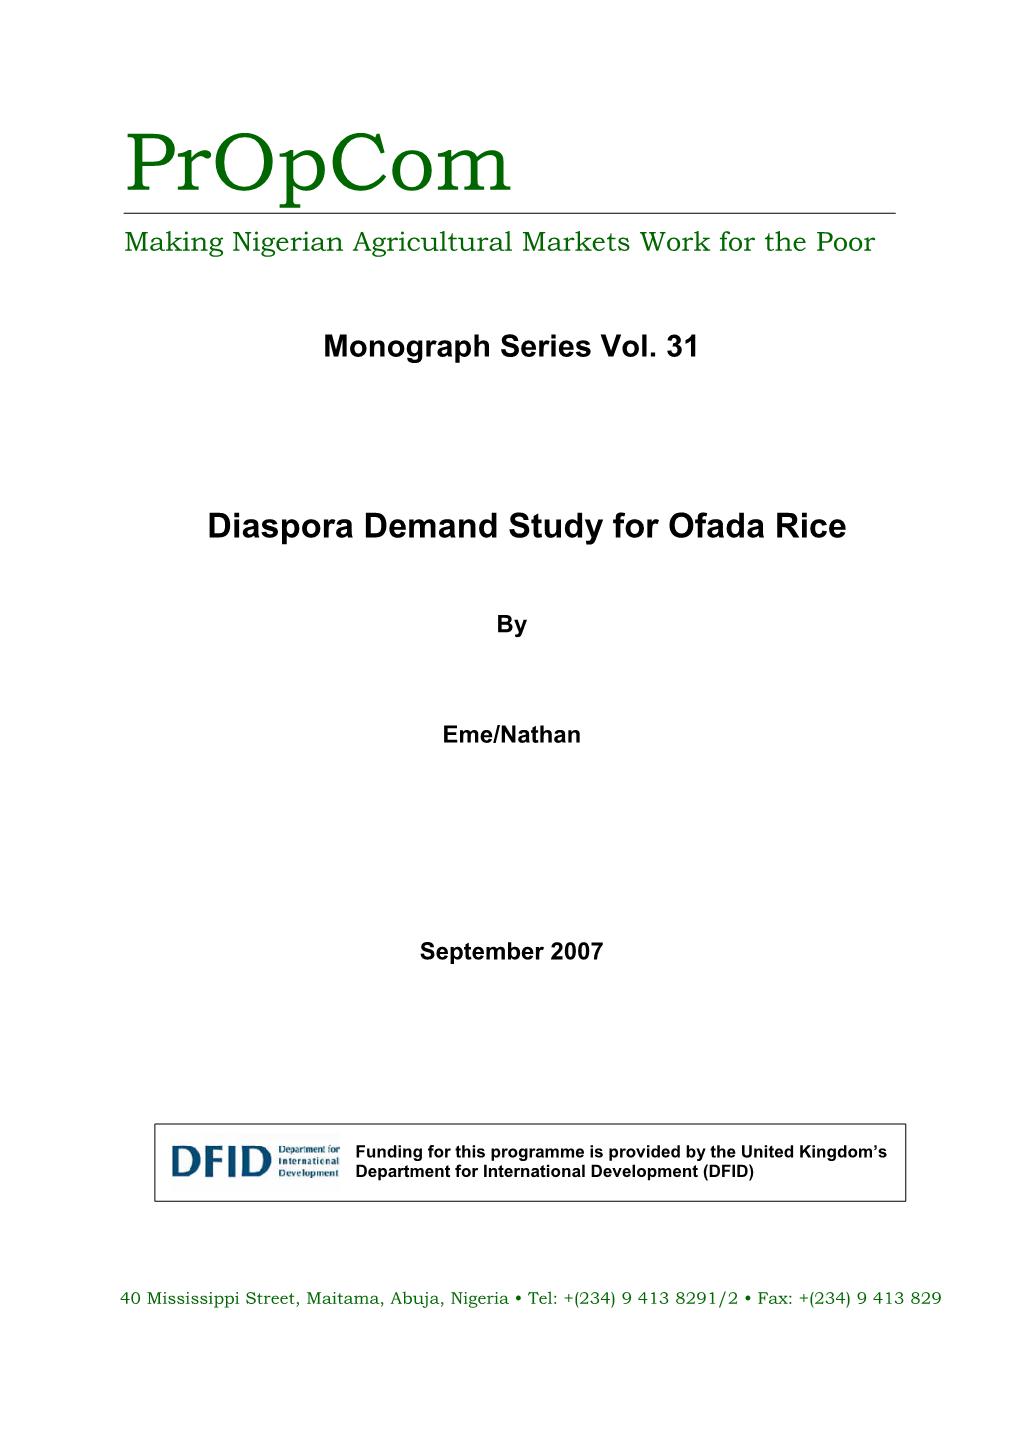 Monograph Series Vol. 31 Diaspora Demand Study for Ofada Rice